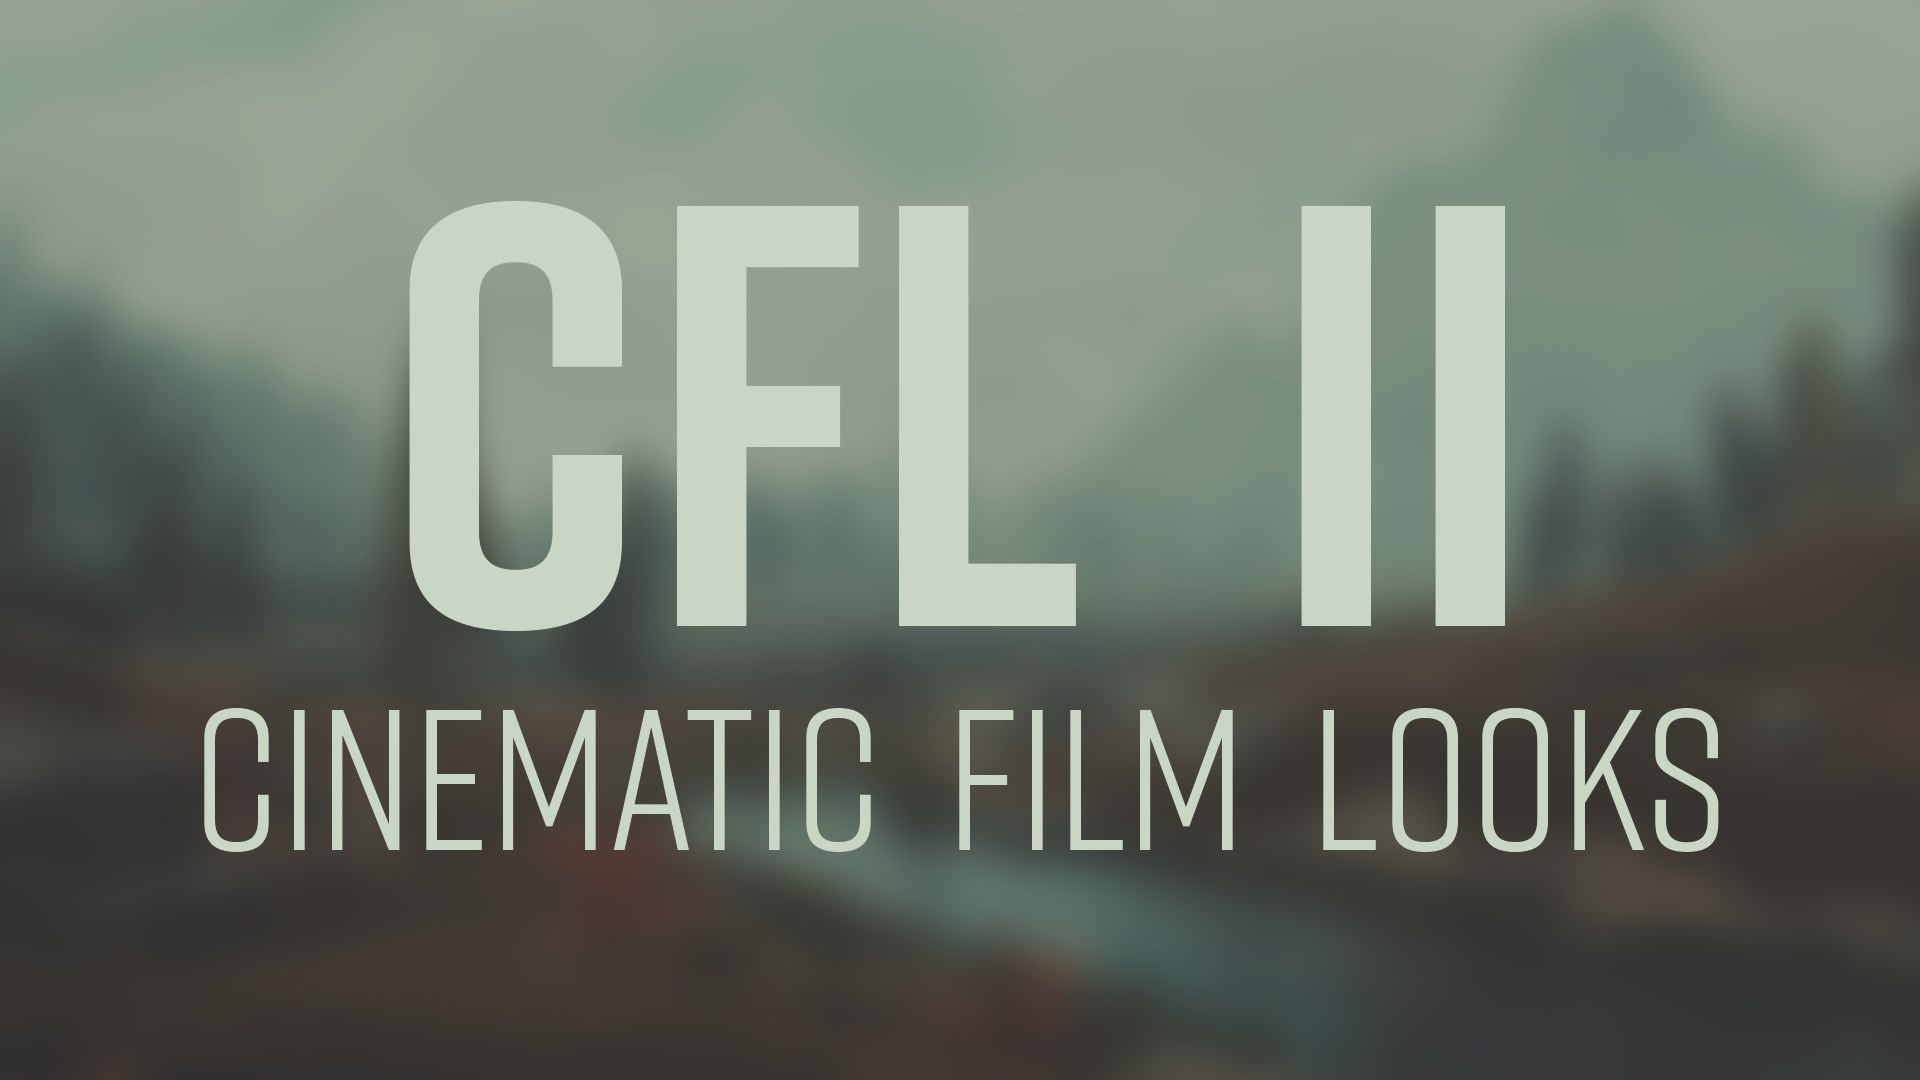 Cfl enb cinematic film looks fallout 4 фото 1